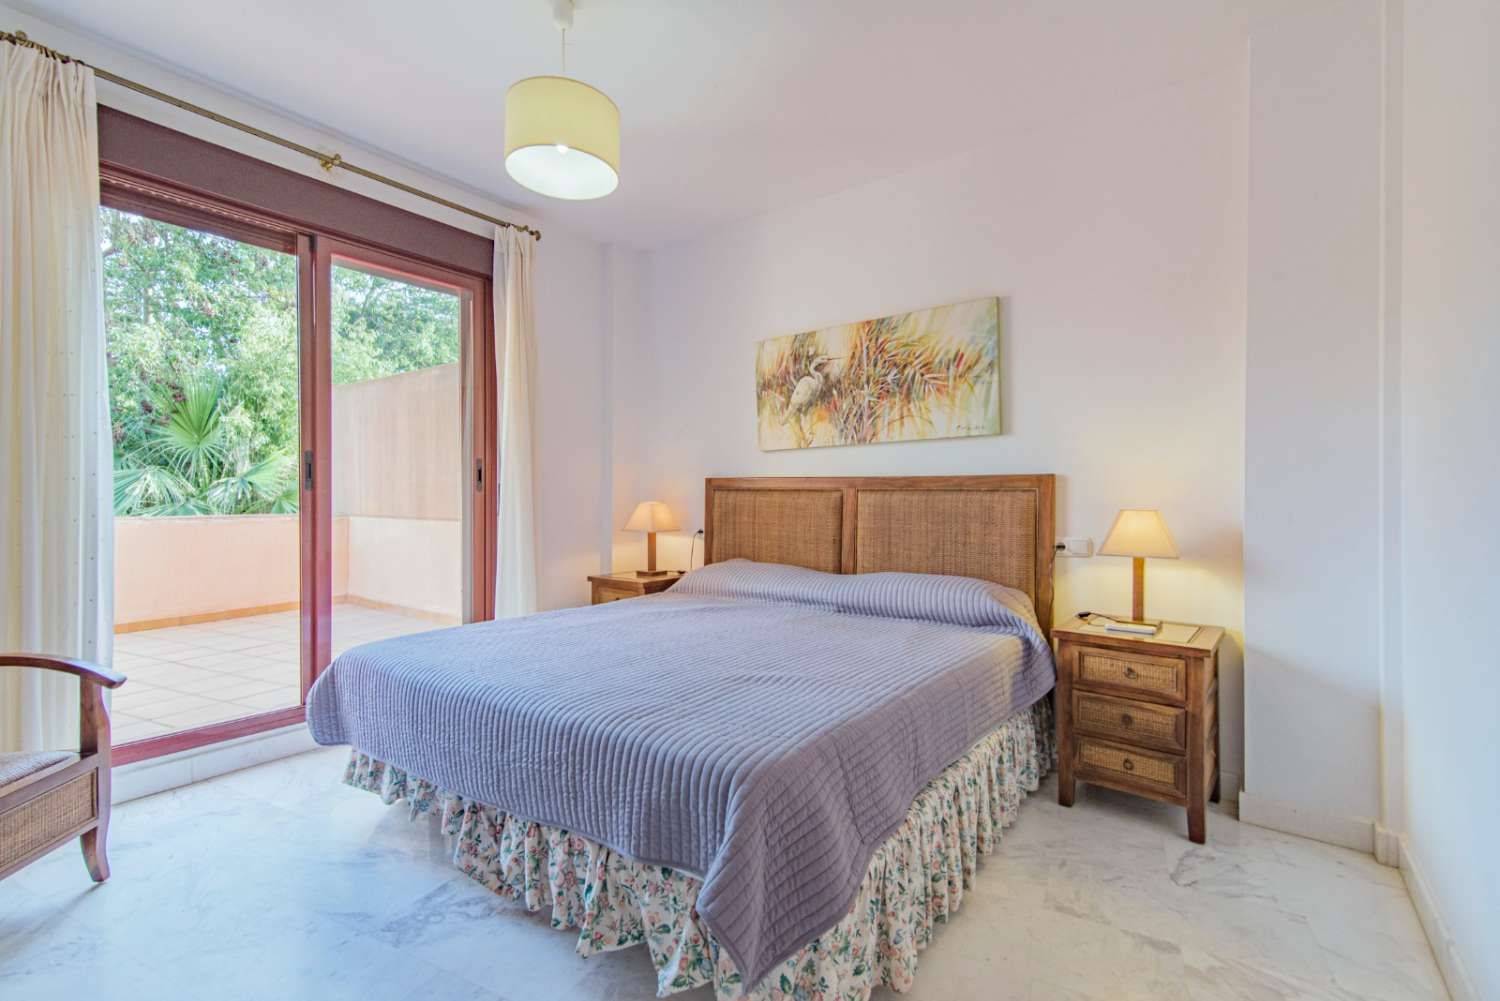 3 bedroom apartment in Playa Granada from September to June